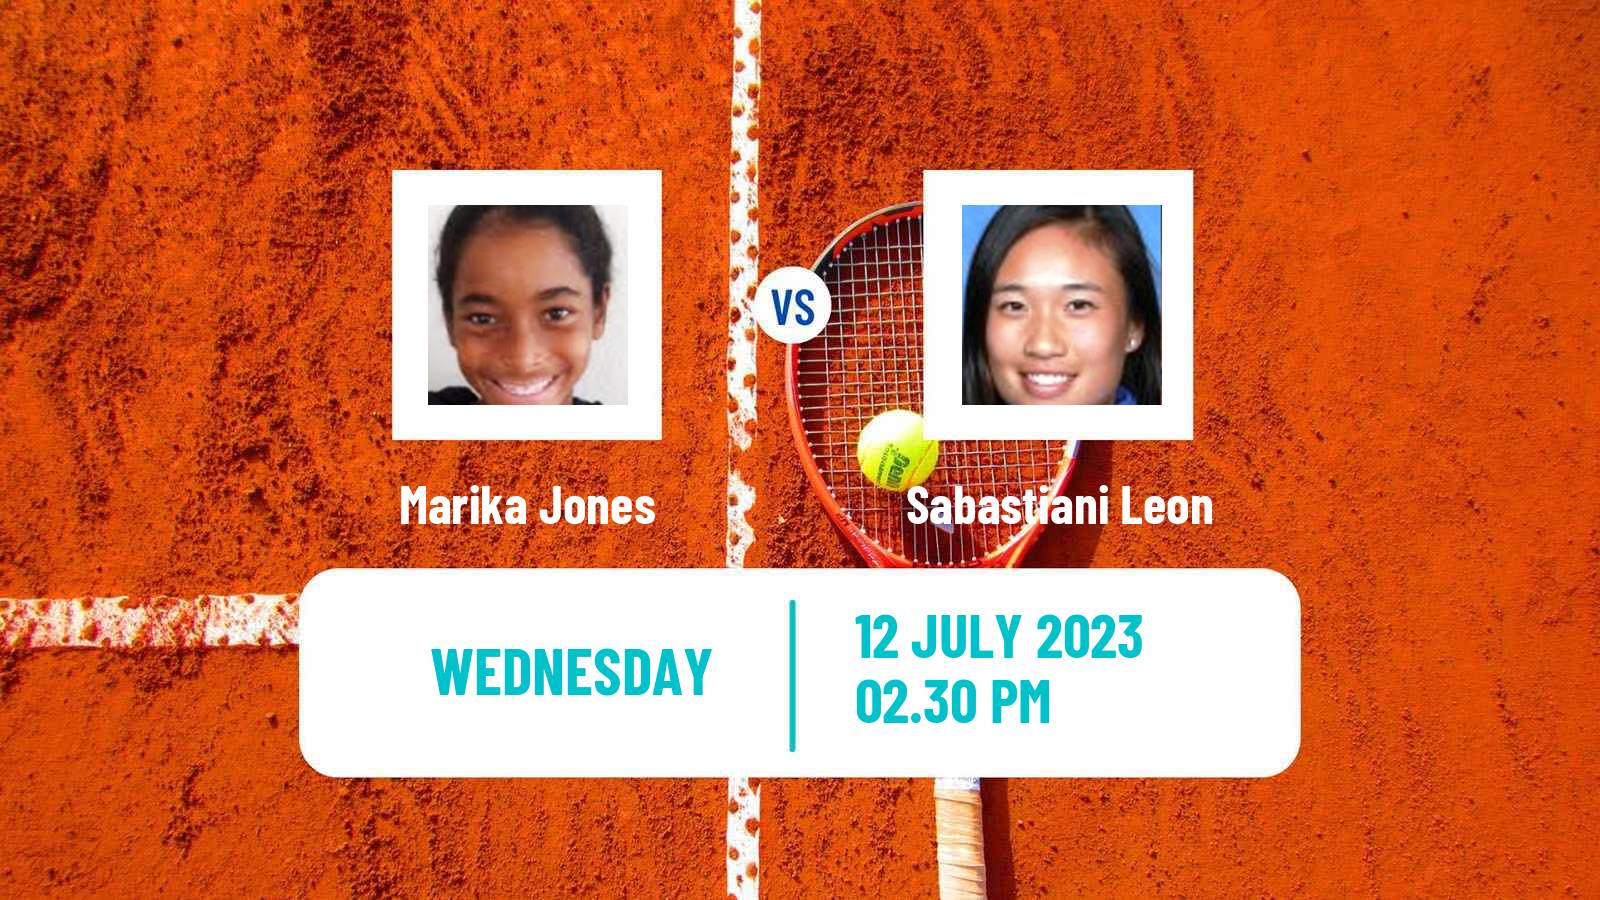 Tennis ITF W15 Lakewood Ca 2 Women Marika Jones - Sabastiani Leon